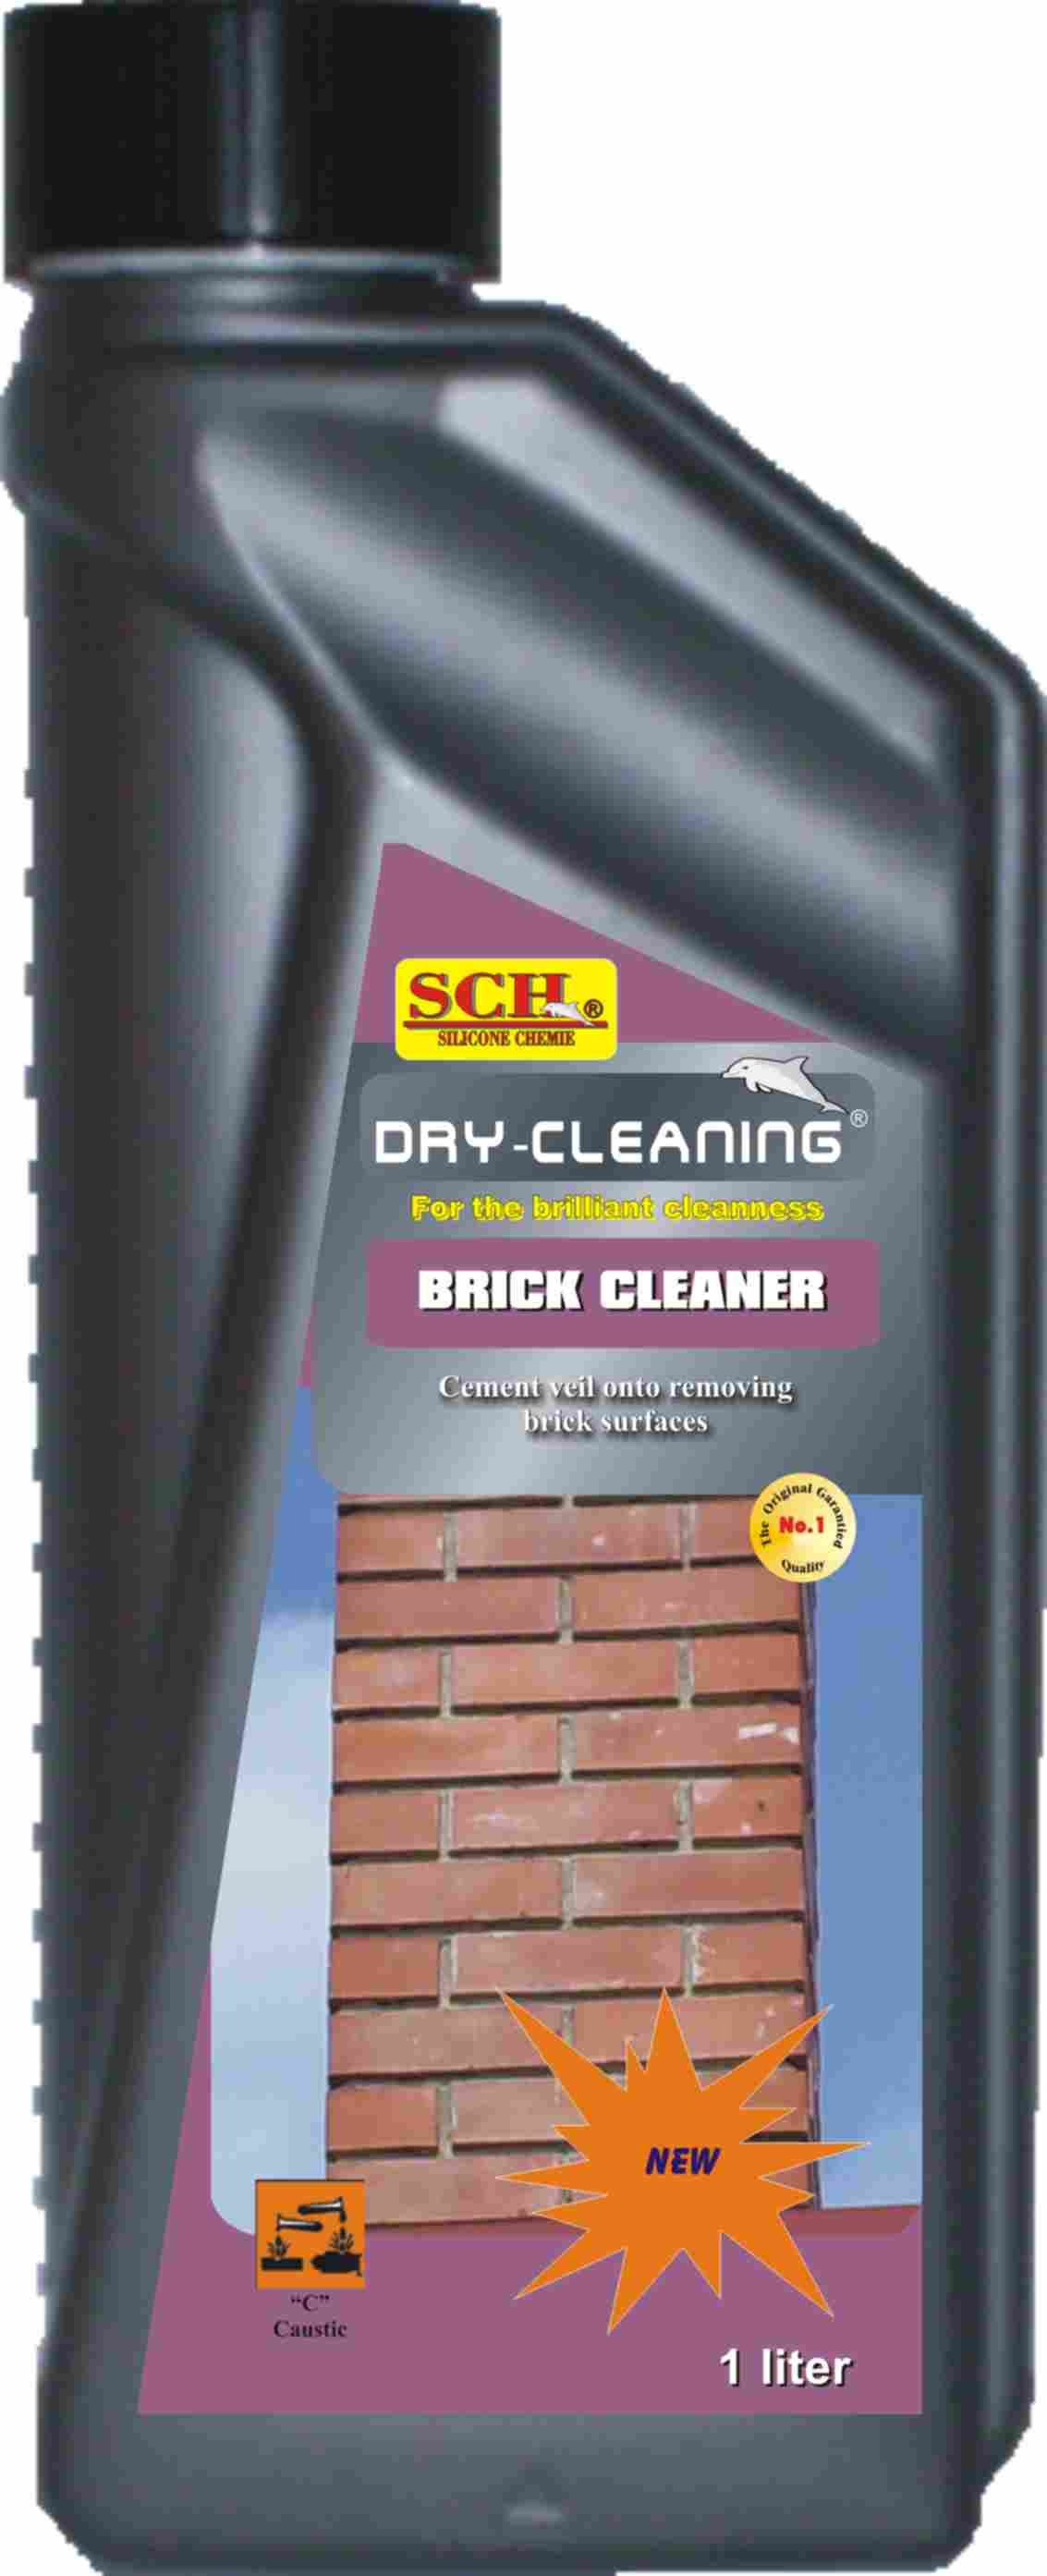 Brick Cleaner